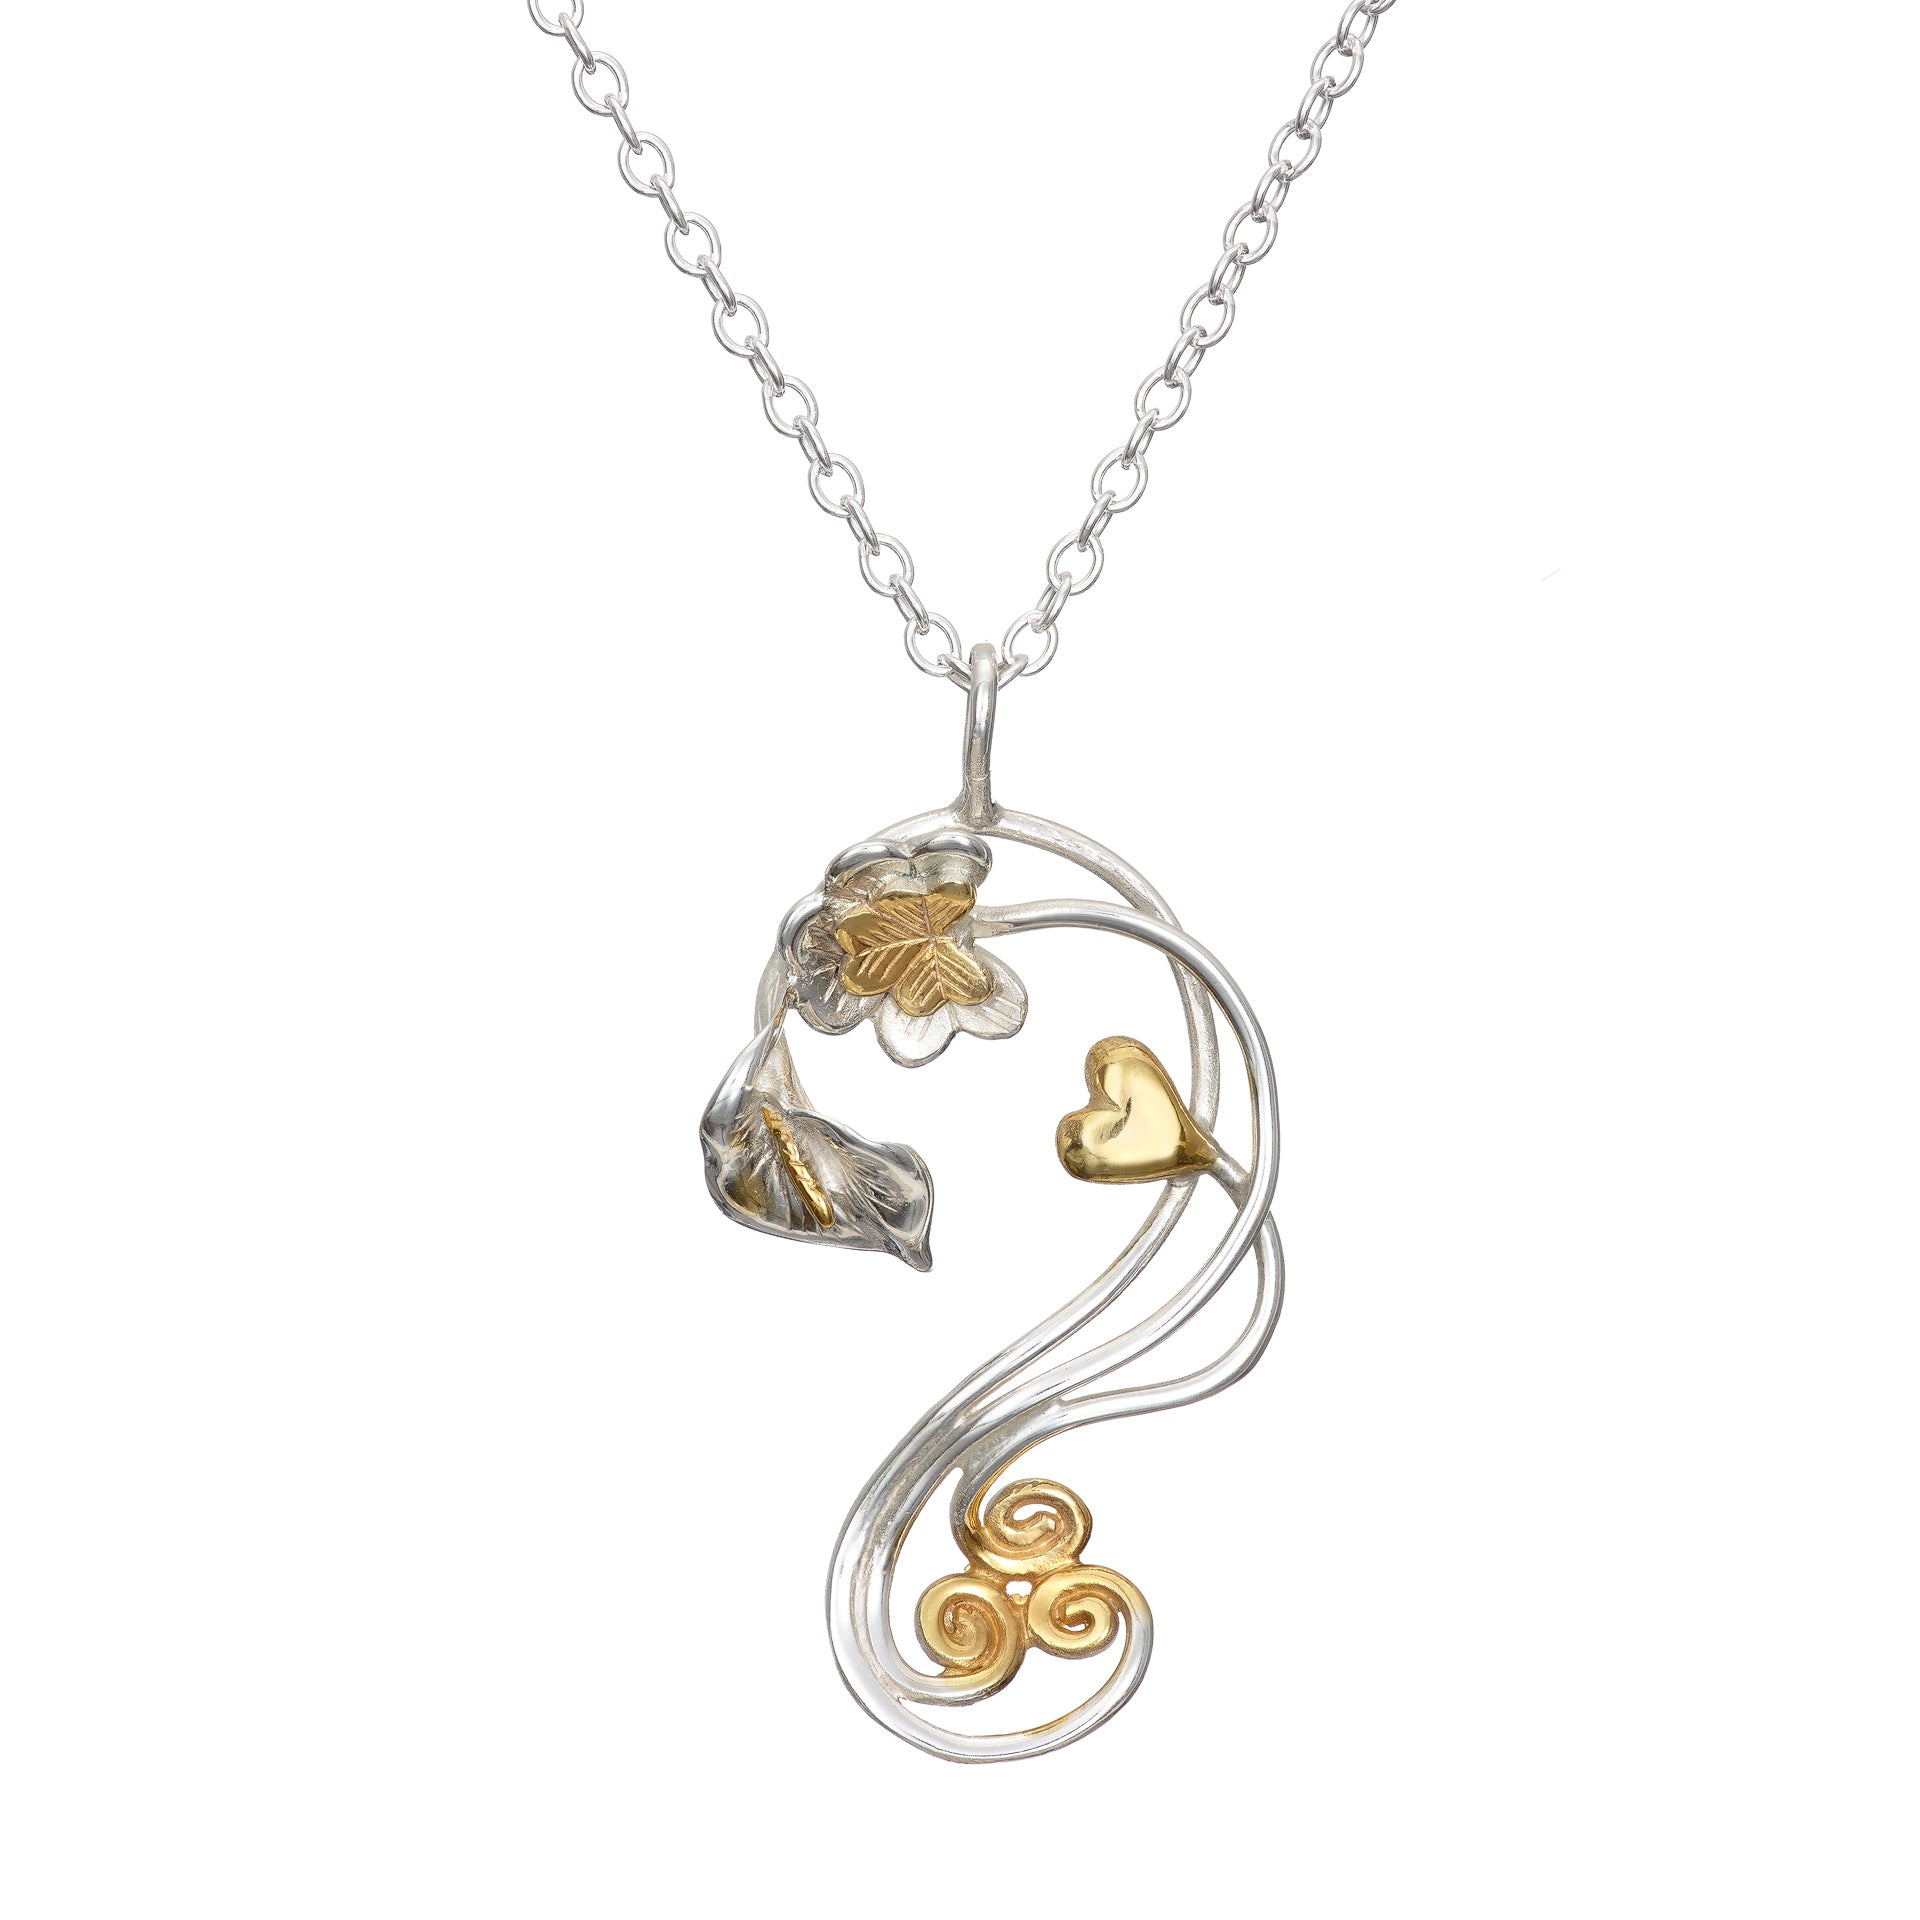 Eireann pendant, Mise eire jewellery collection